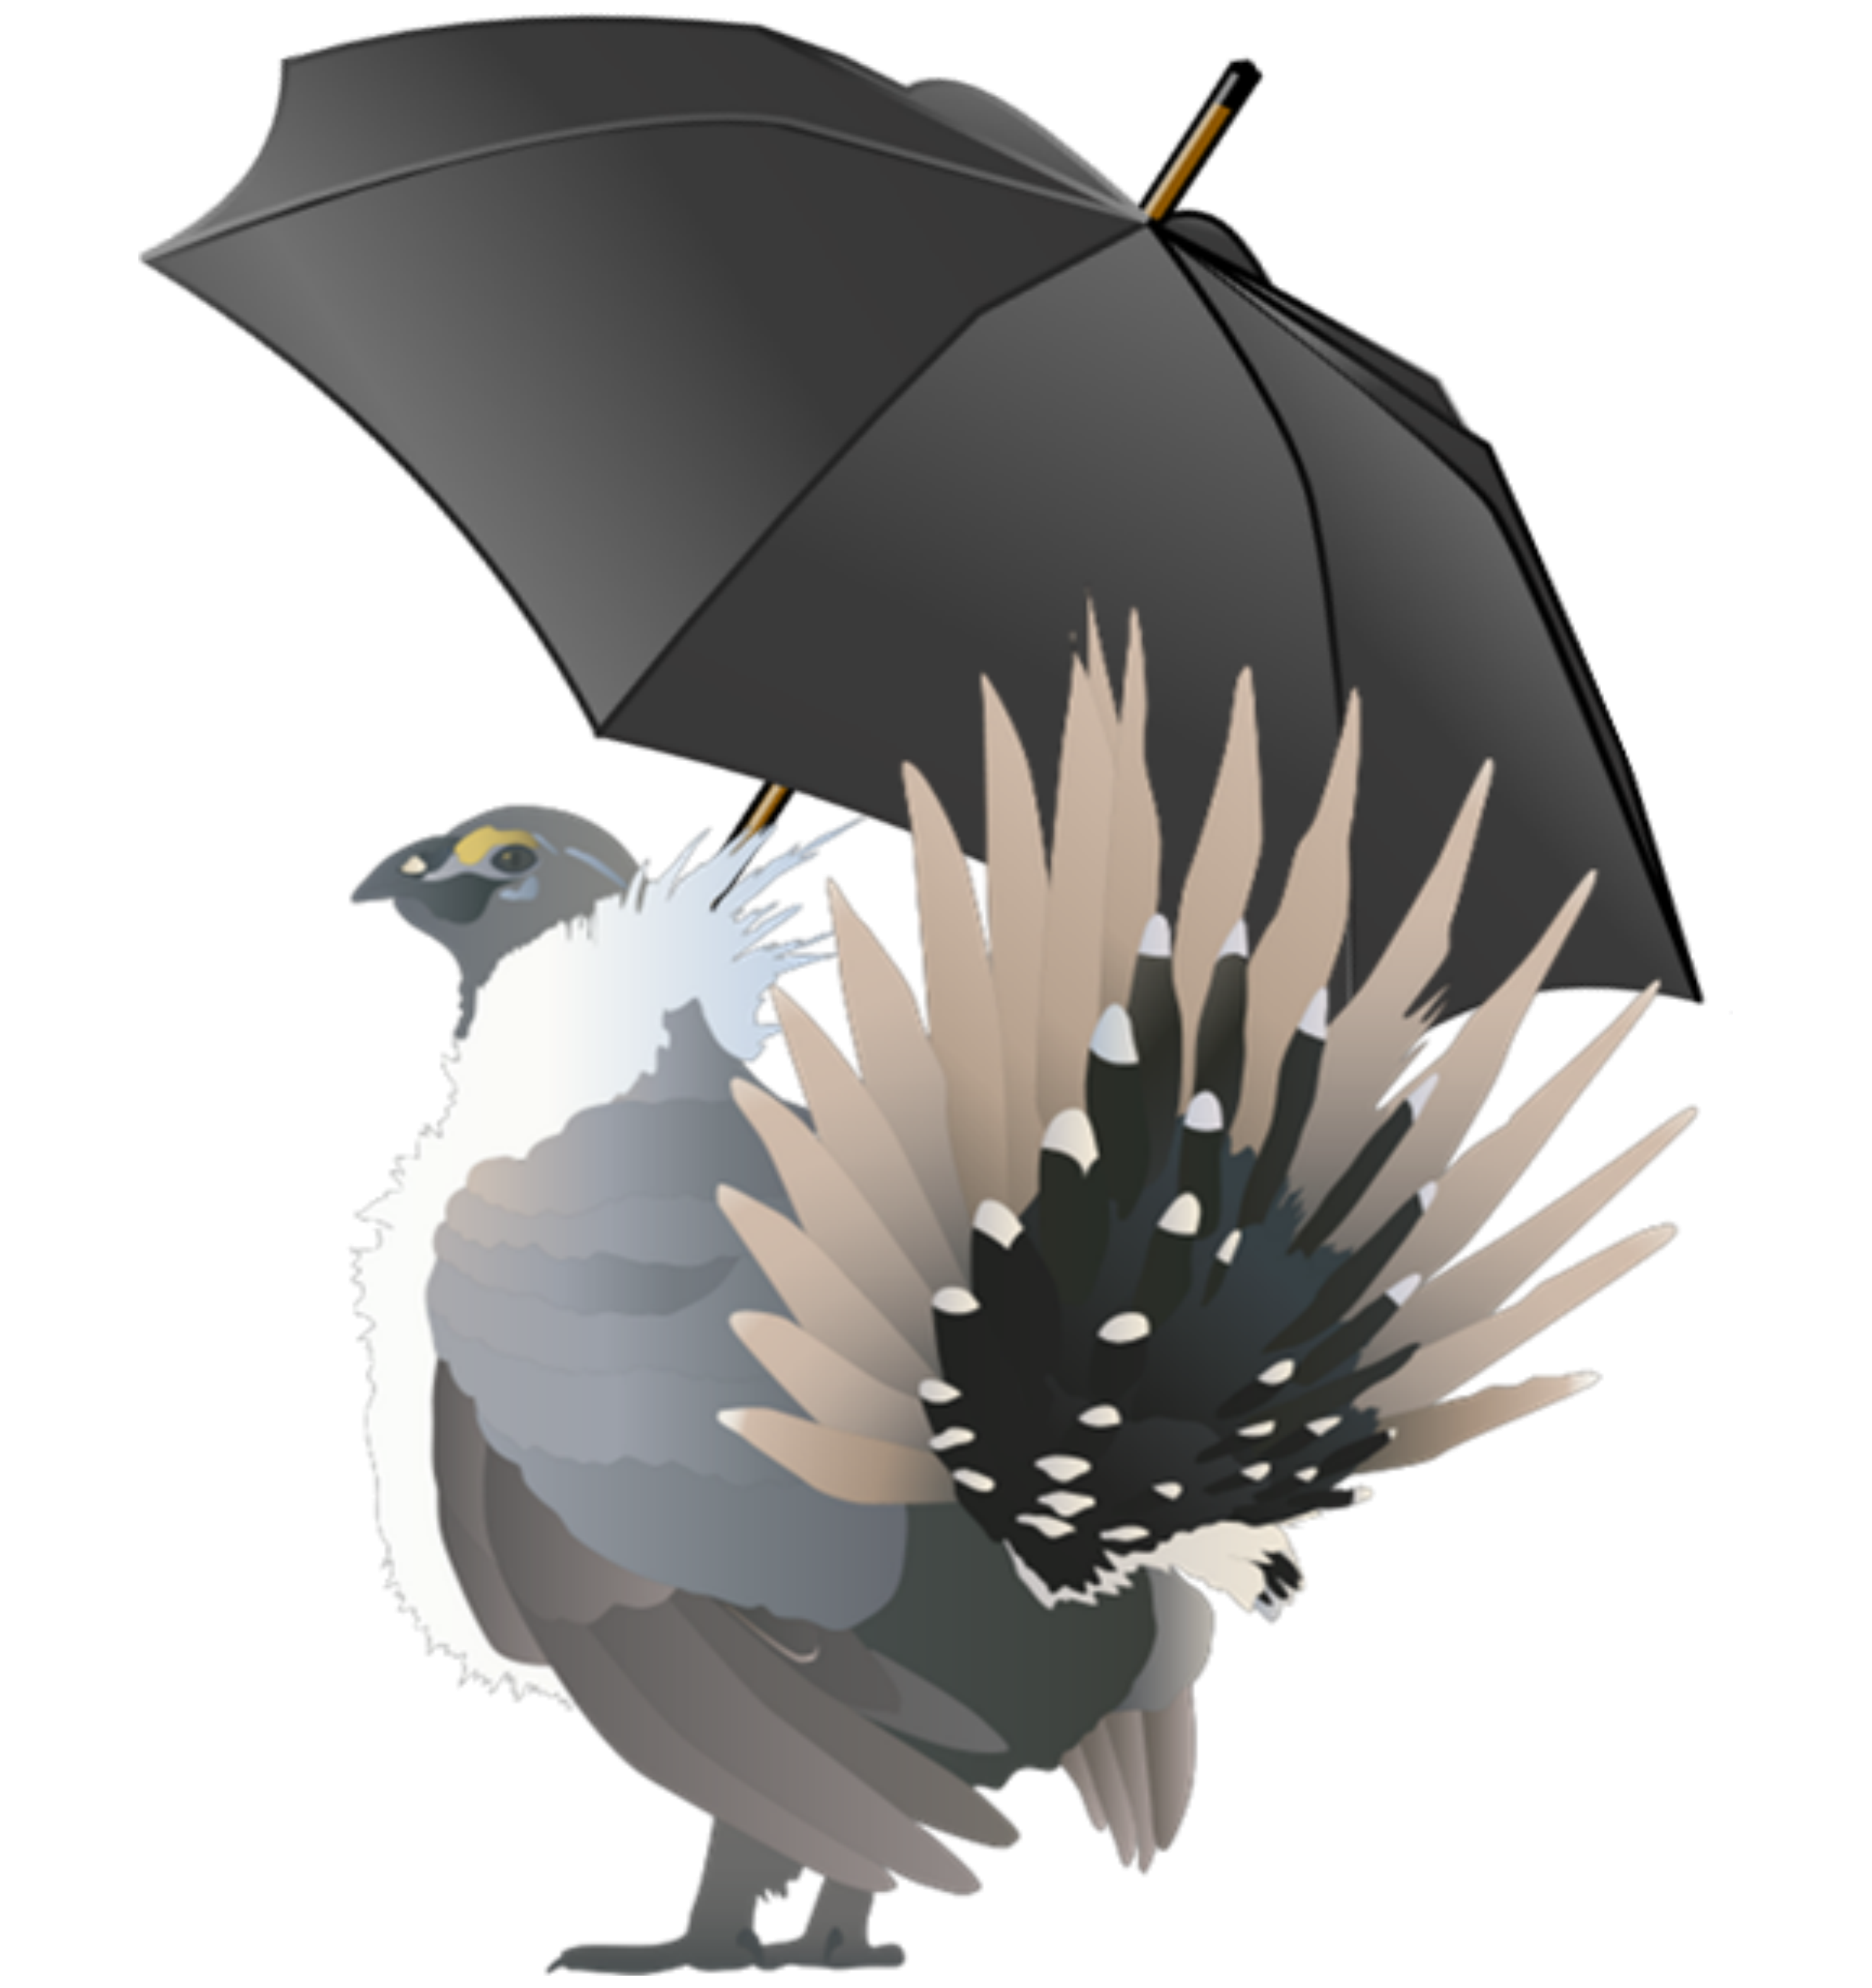 sage-grouse umbrella